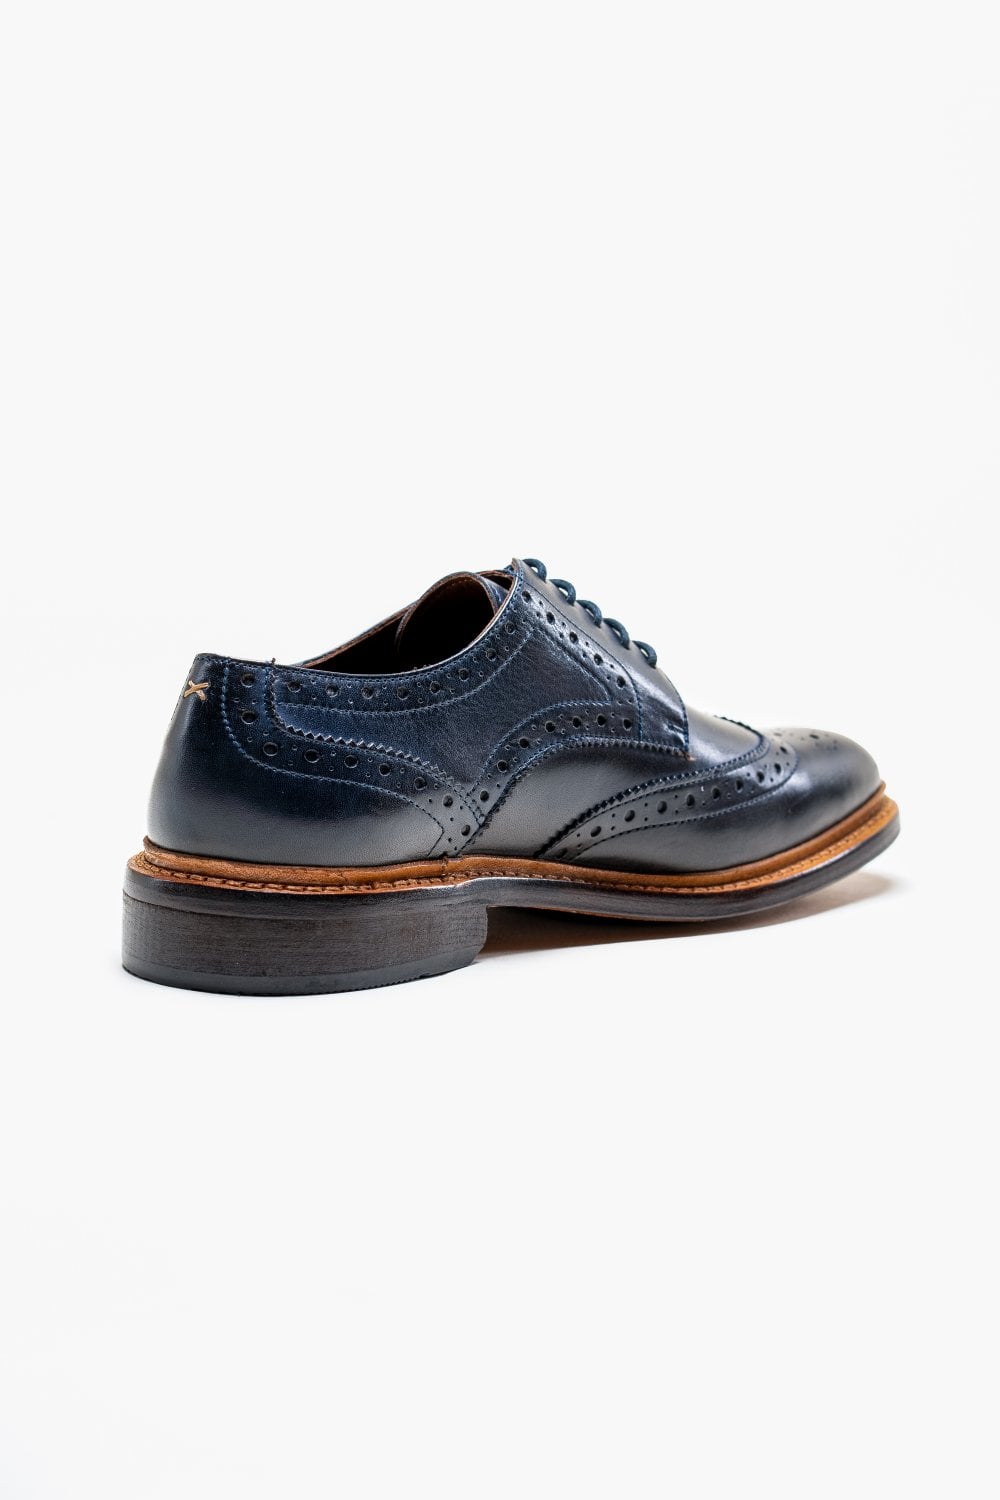 Cavani Premium Merton Shoes - Navy